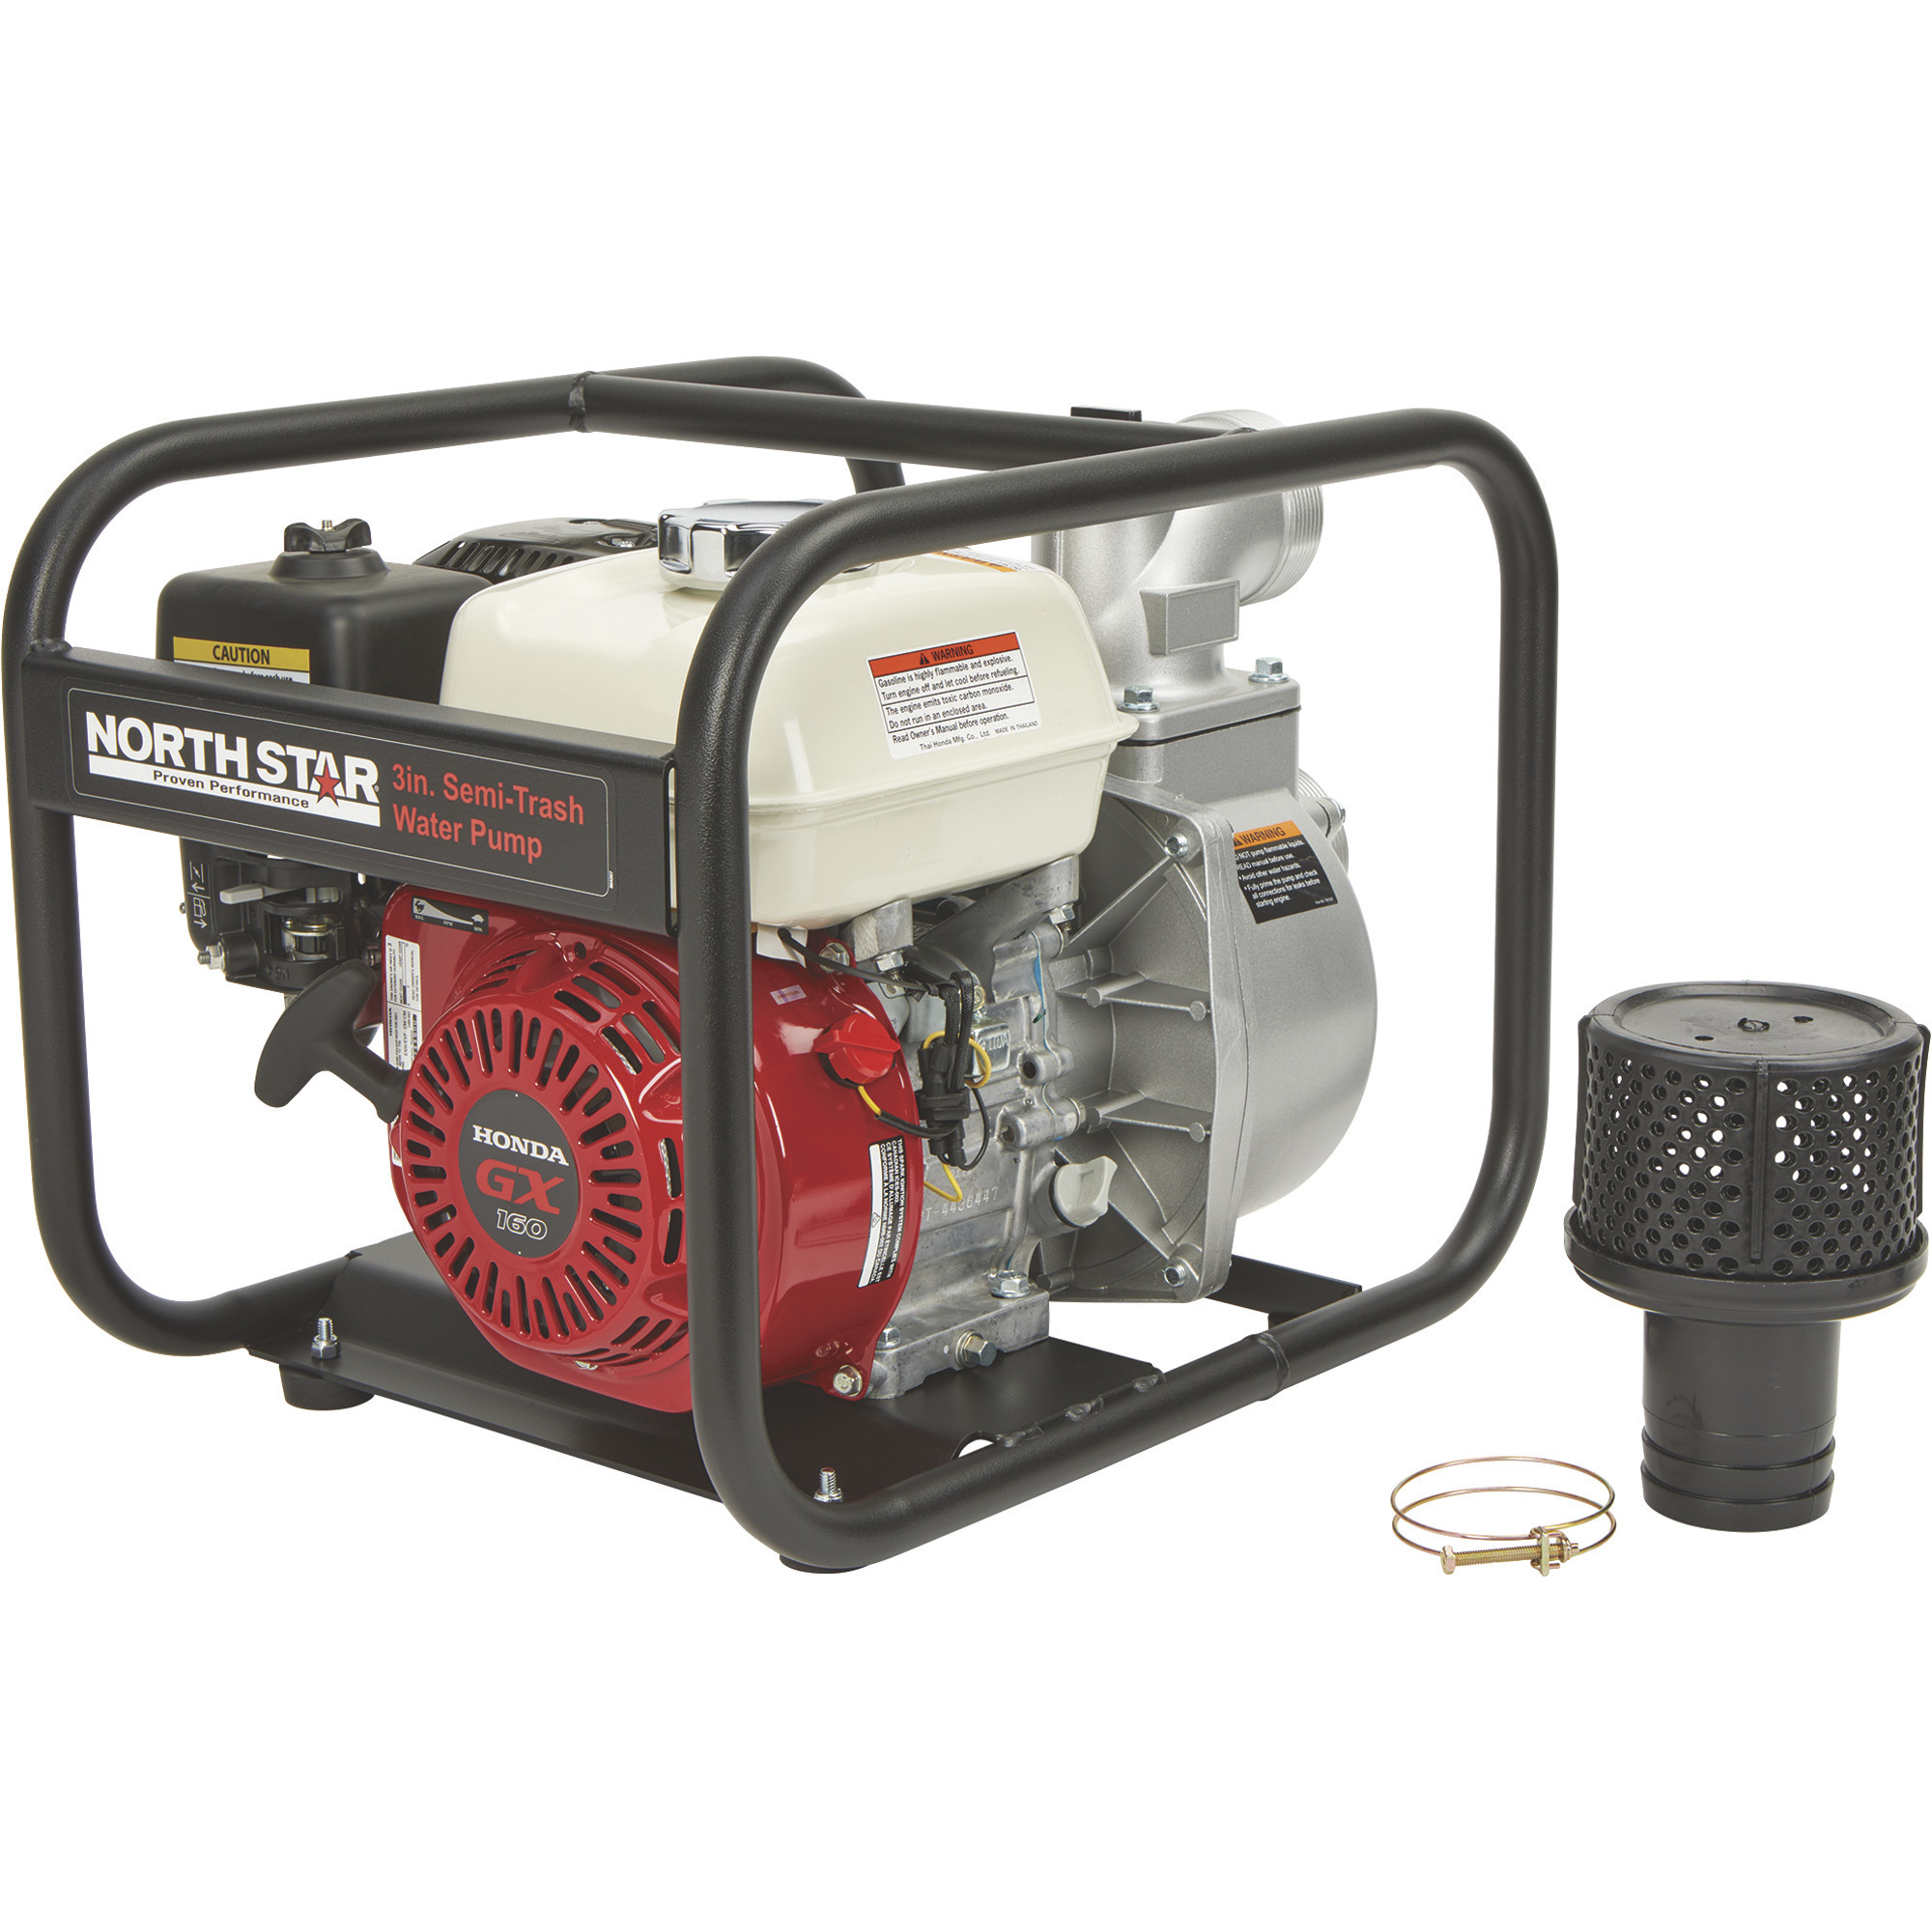 NorthStar Self-Priming Semi-Trash Water Pump, 3in. Ports, 15,850 GPH,  3/4in. Solids Capacity, 163cc Honda GX160 Engine